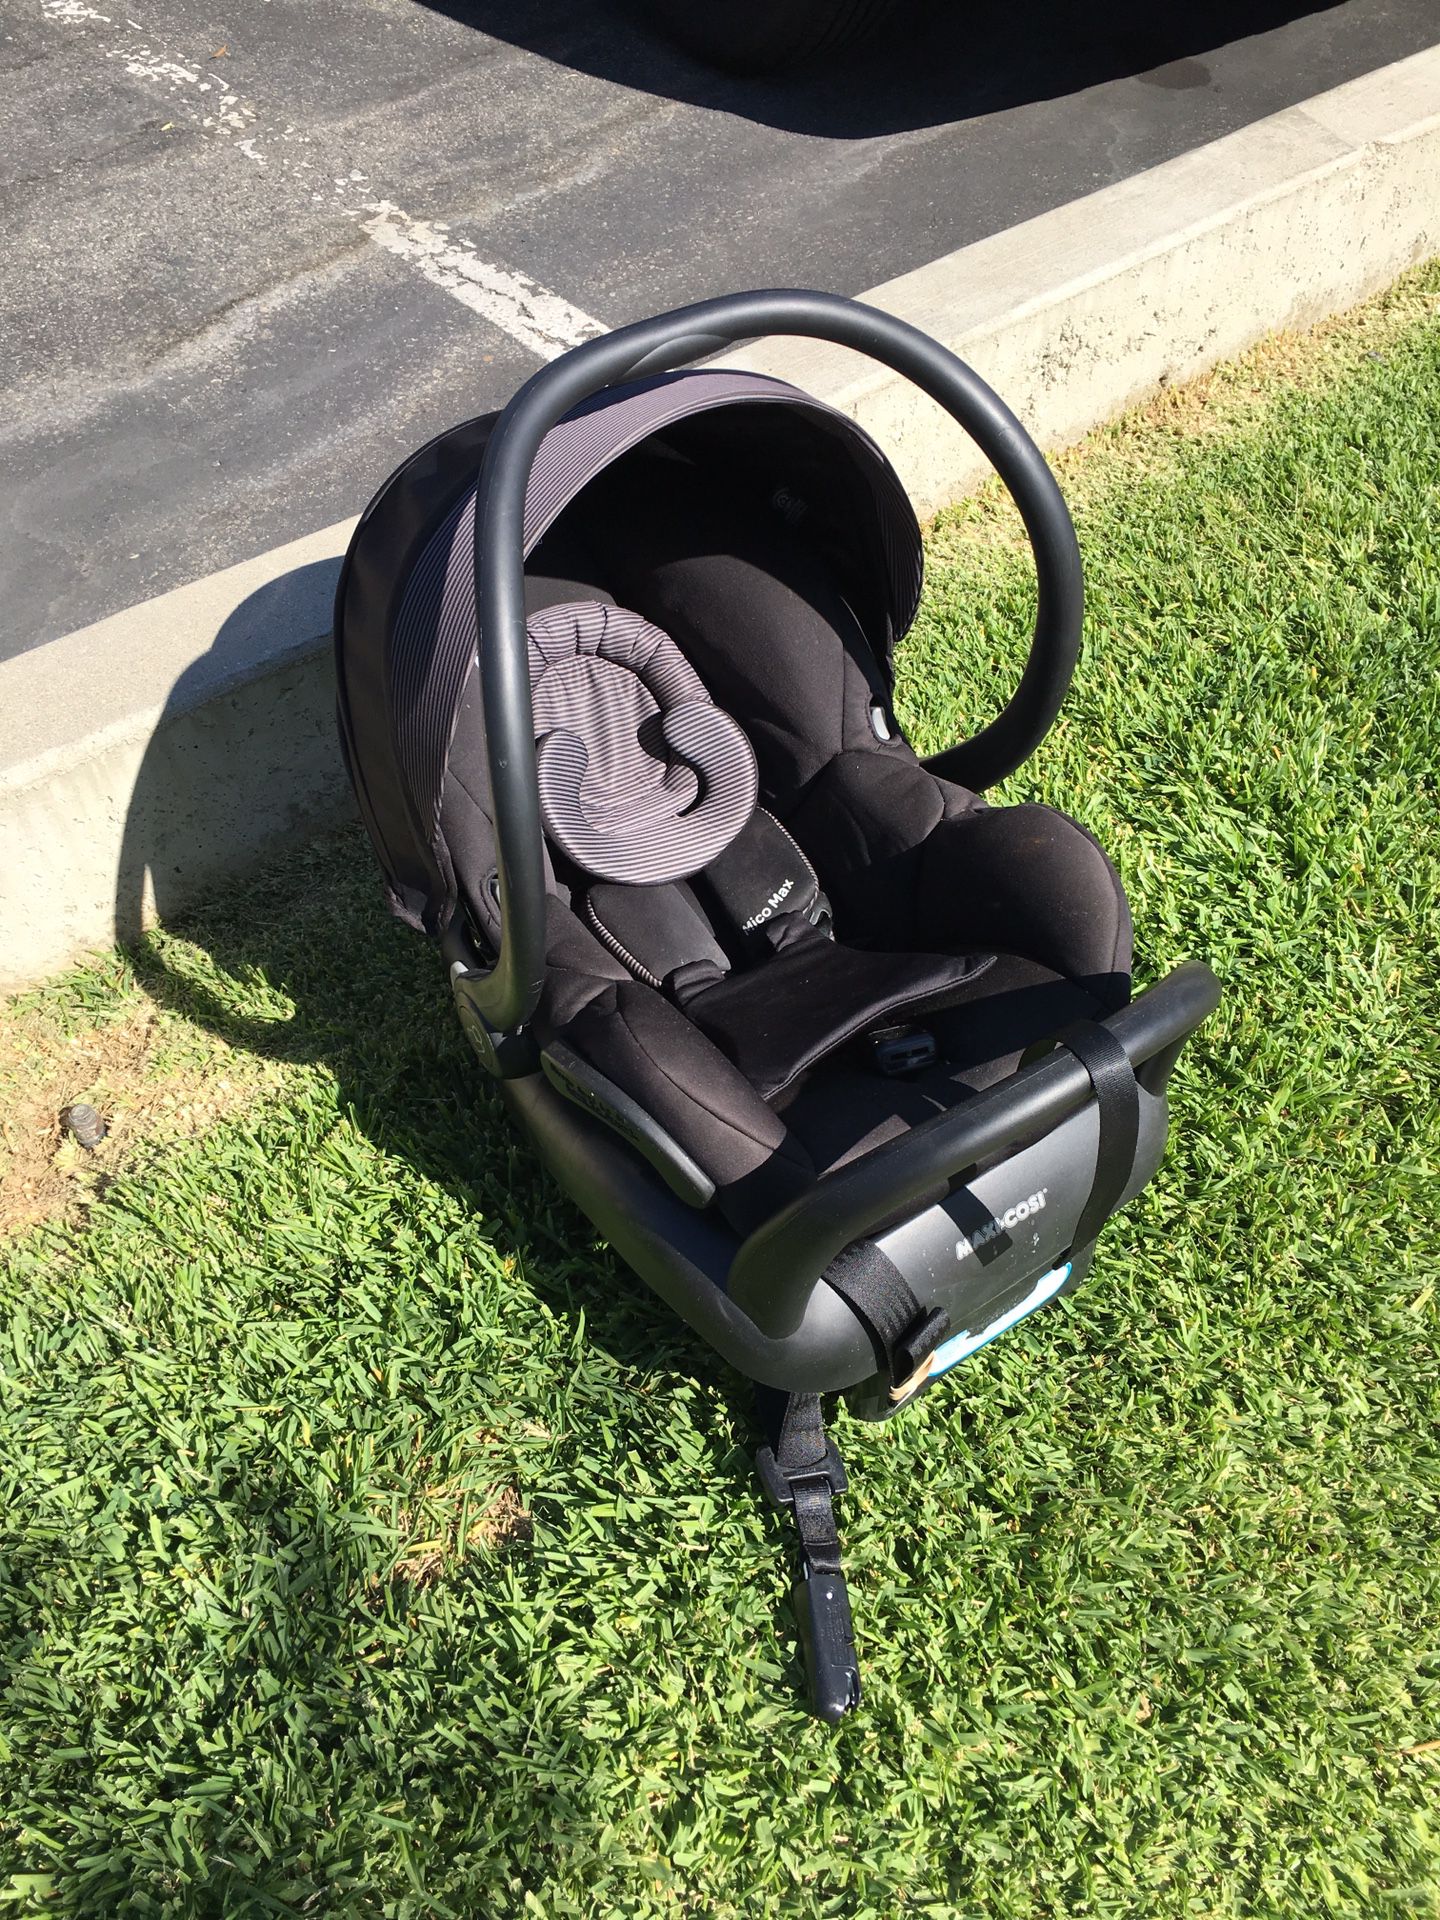 Max Cosi infant car seat